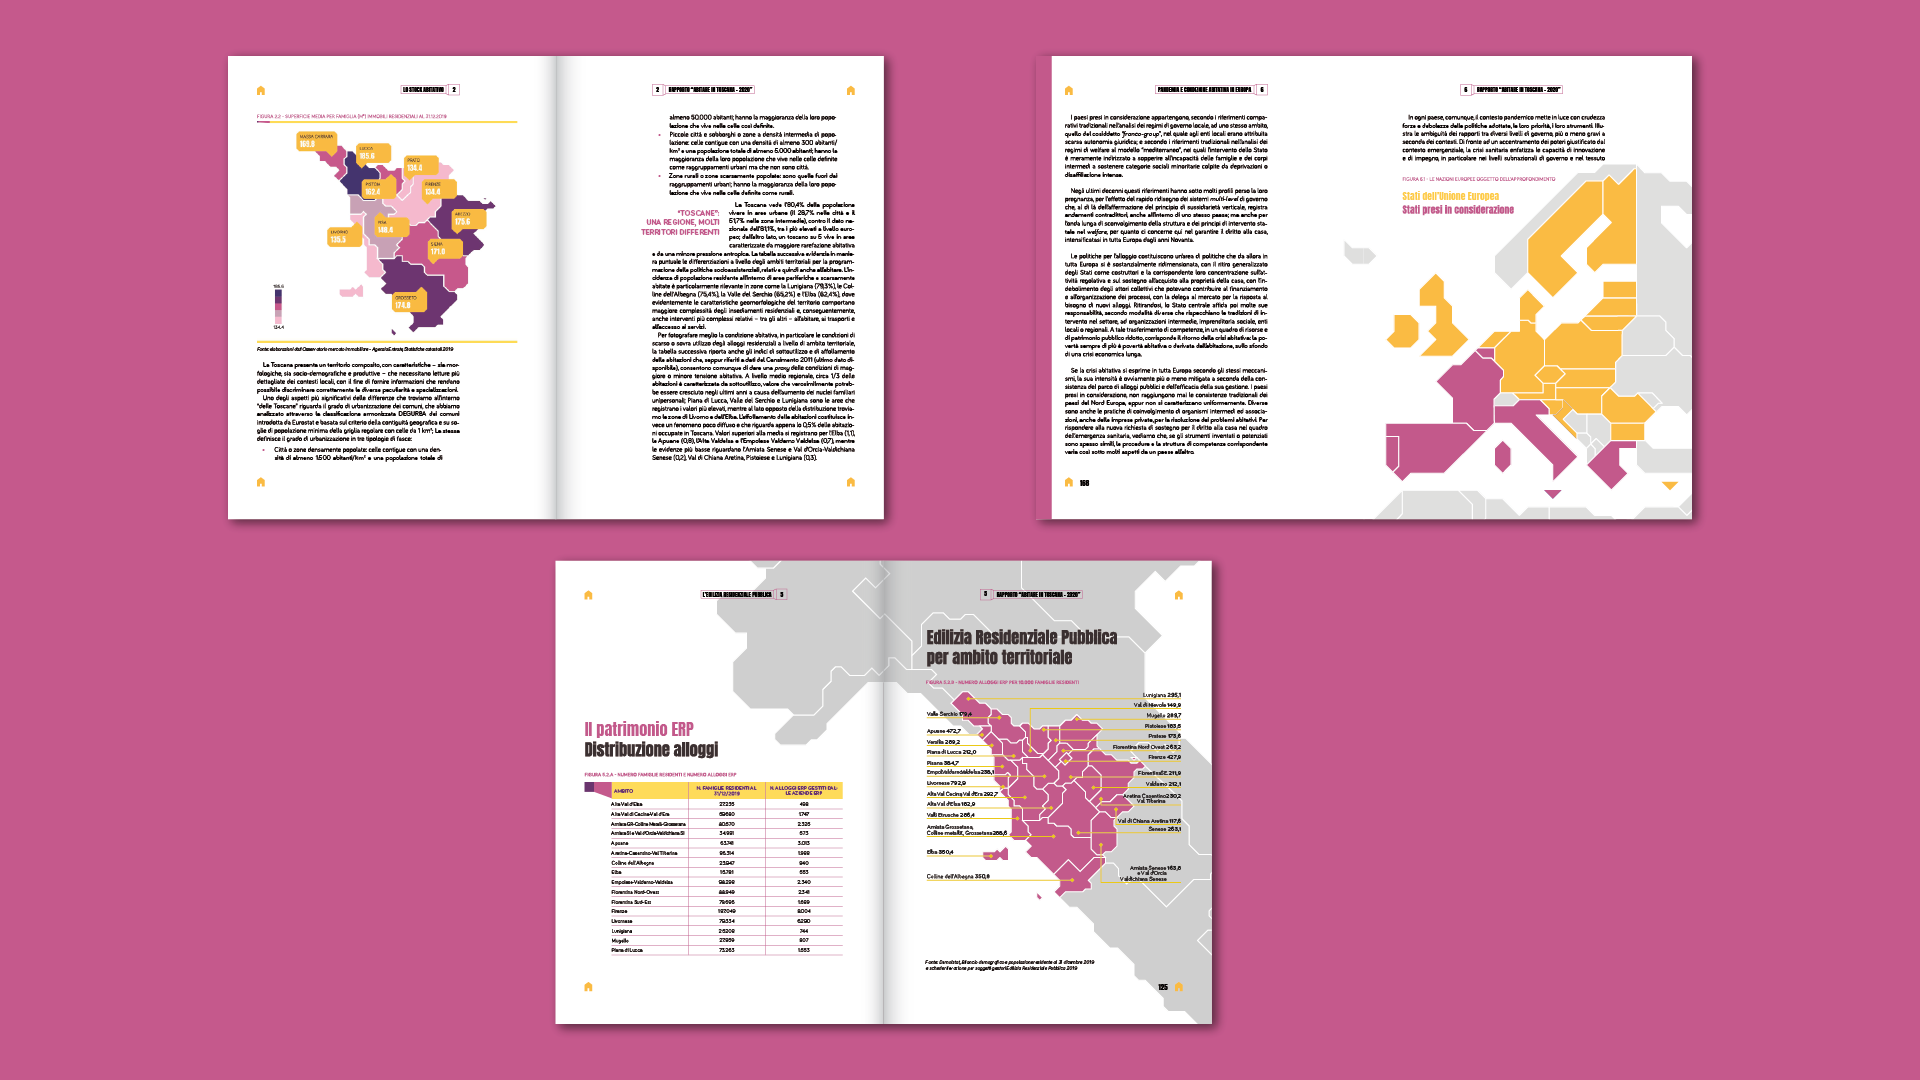 Violenza di genere in Toscana Infografica. Report ELOE Studio